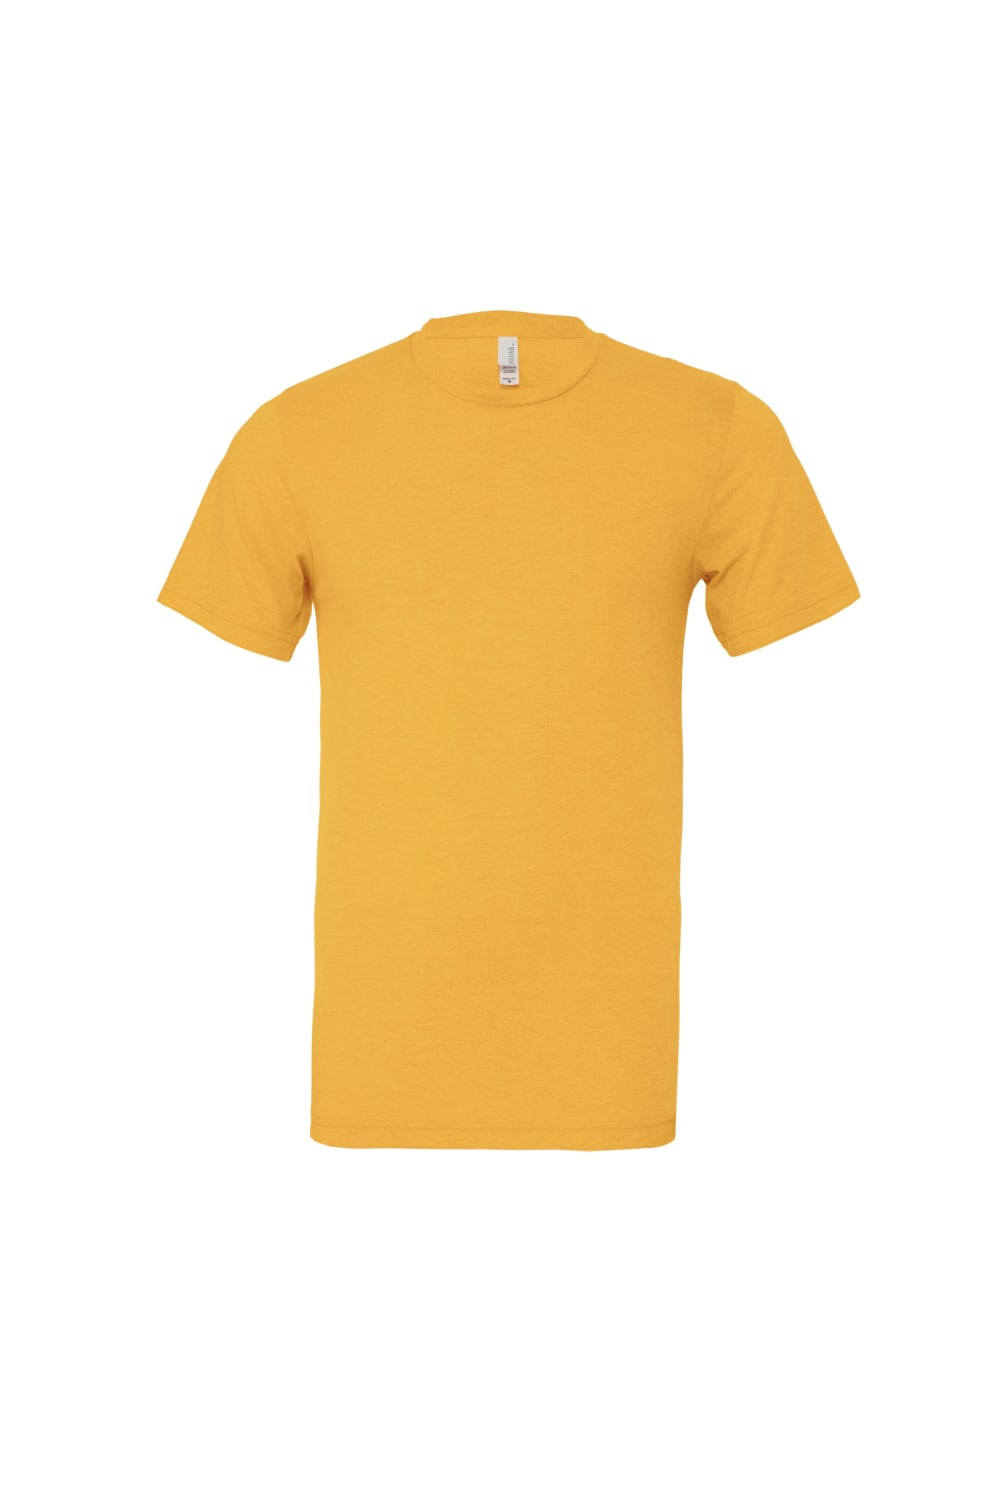 Bella + Canvas Unisex Adult T-Shirt (Golden Yellow Heather)